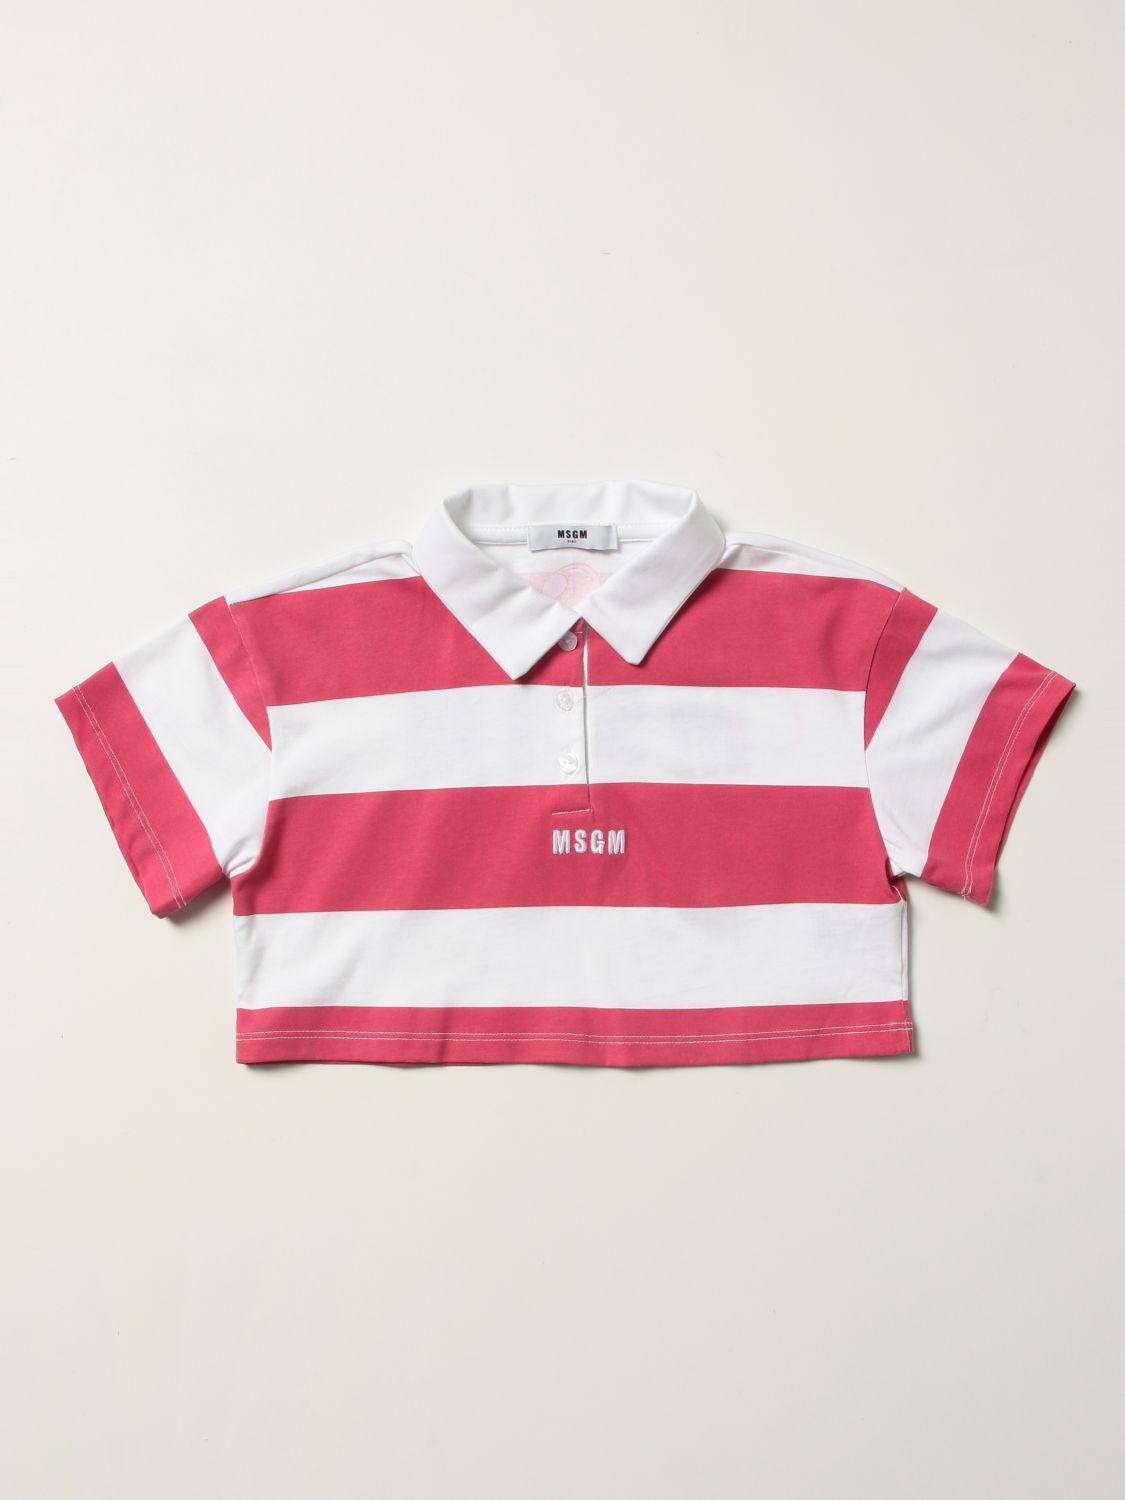 Msgm Kids Outlet: polo shirt for girls - Fuchsia | Msgm Kids polo shirt ...